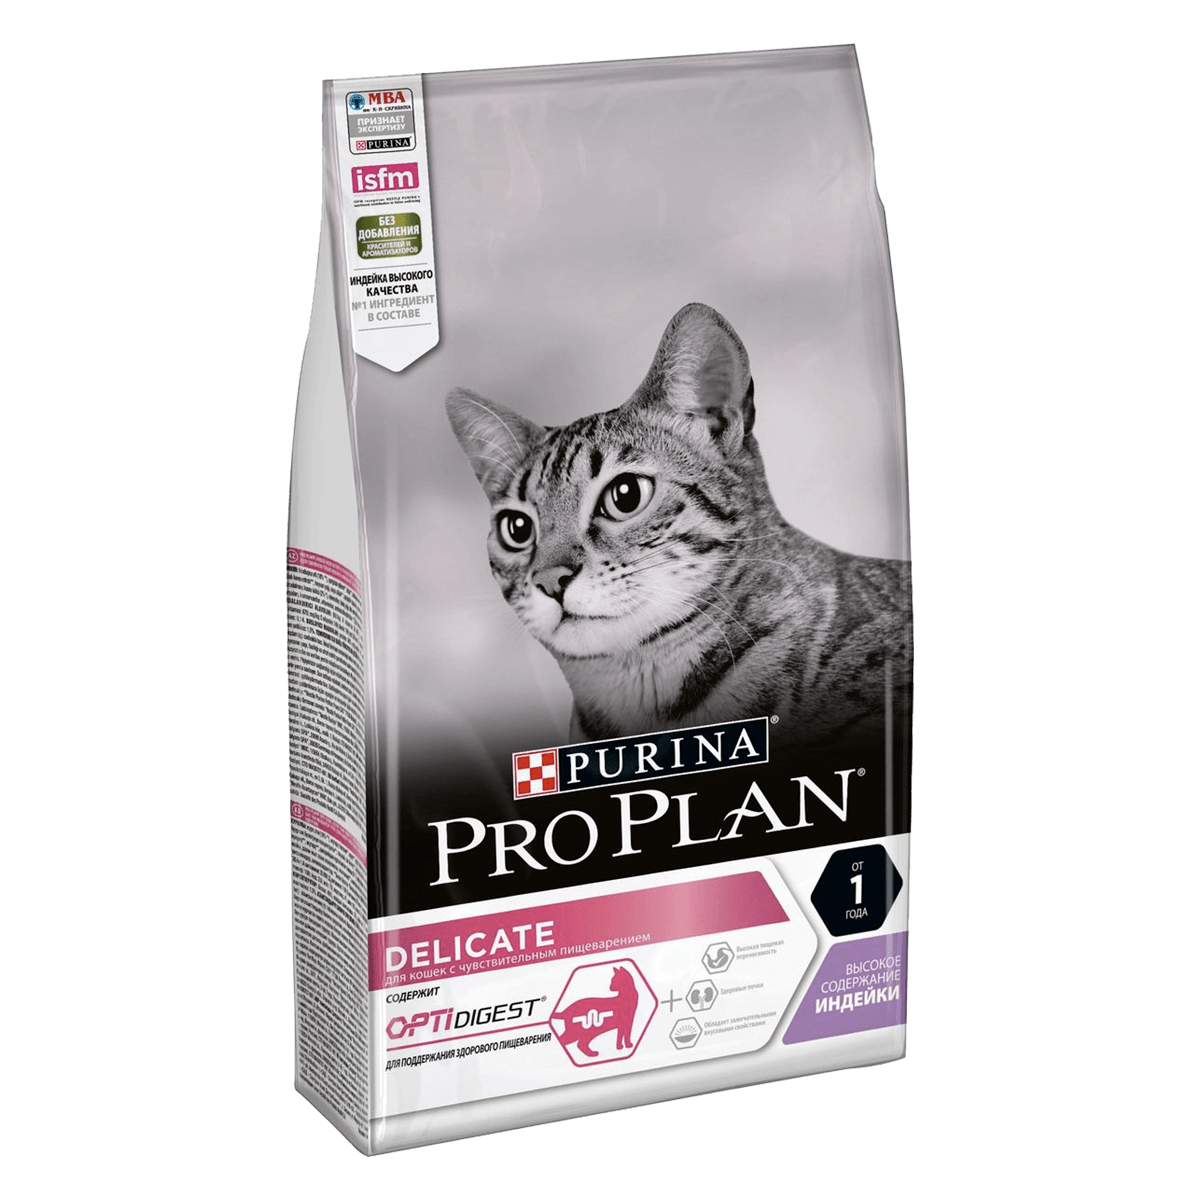 Purina Pro Plan Cat Adult Delicate Sensitive Turkey, 1,5 кг - корм Пурина для кошек с проблемами пищеварения